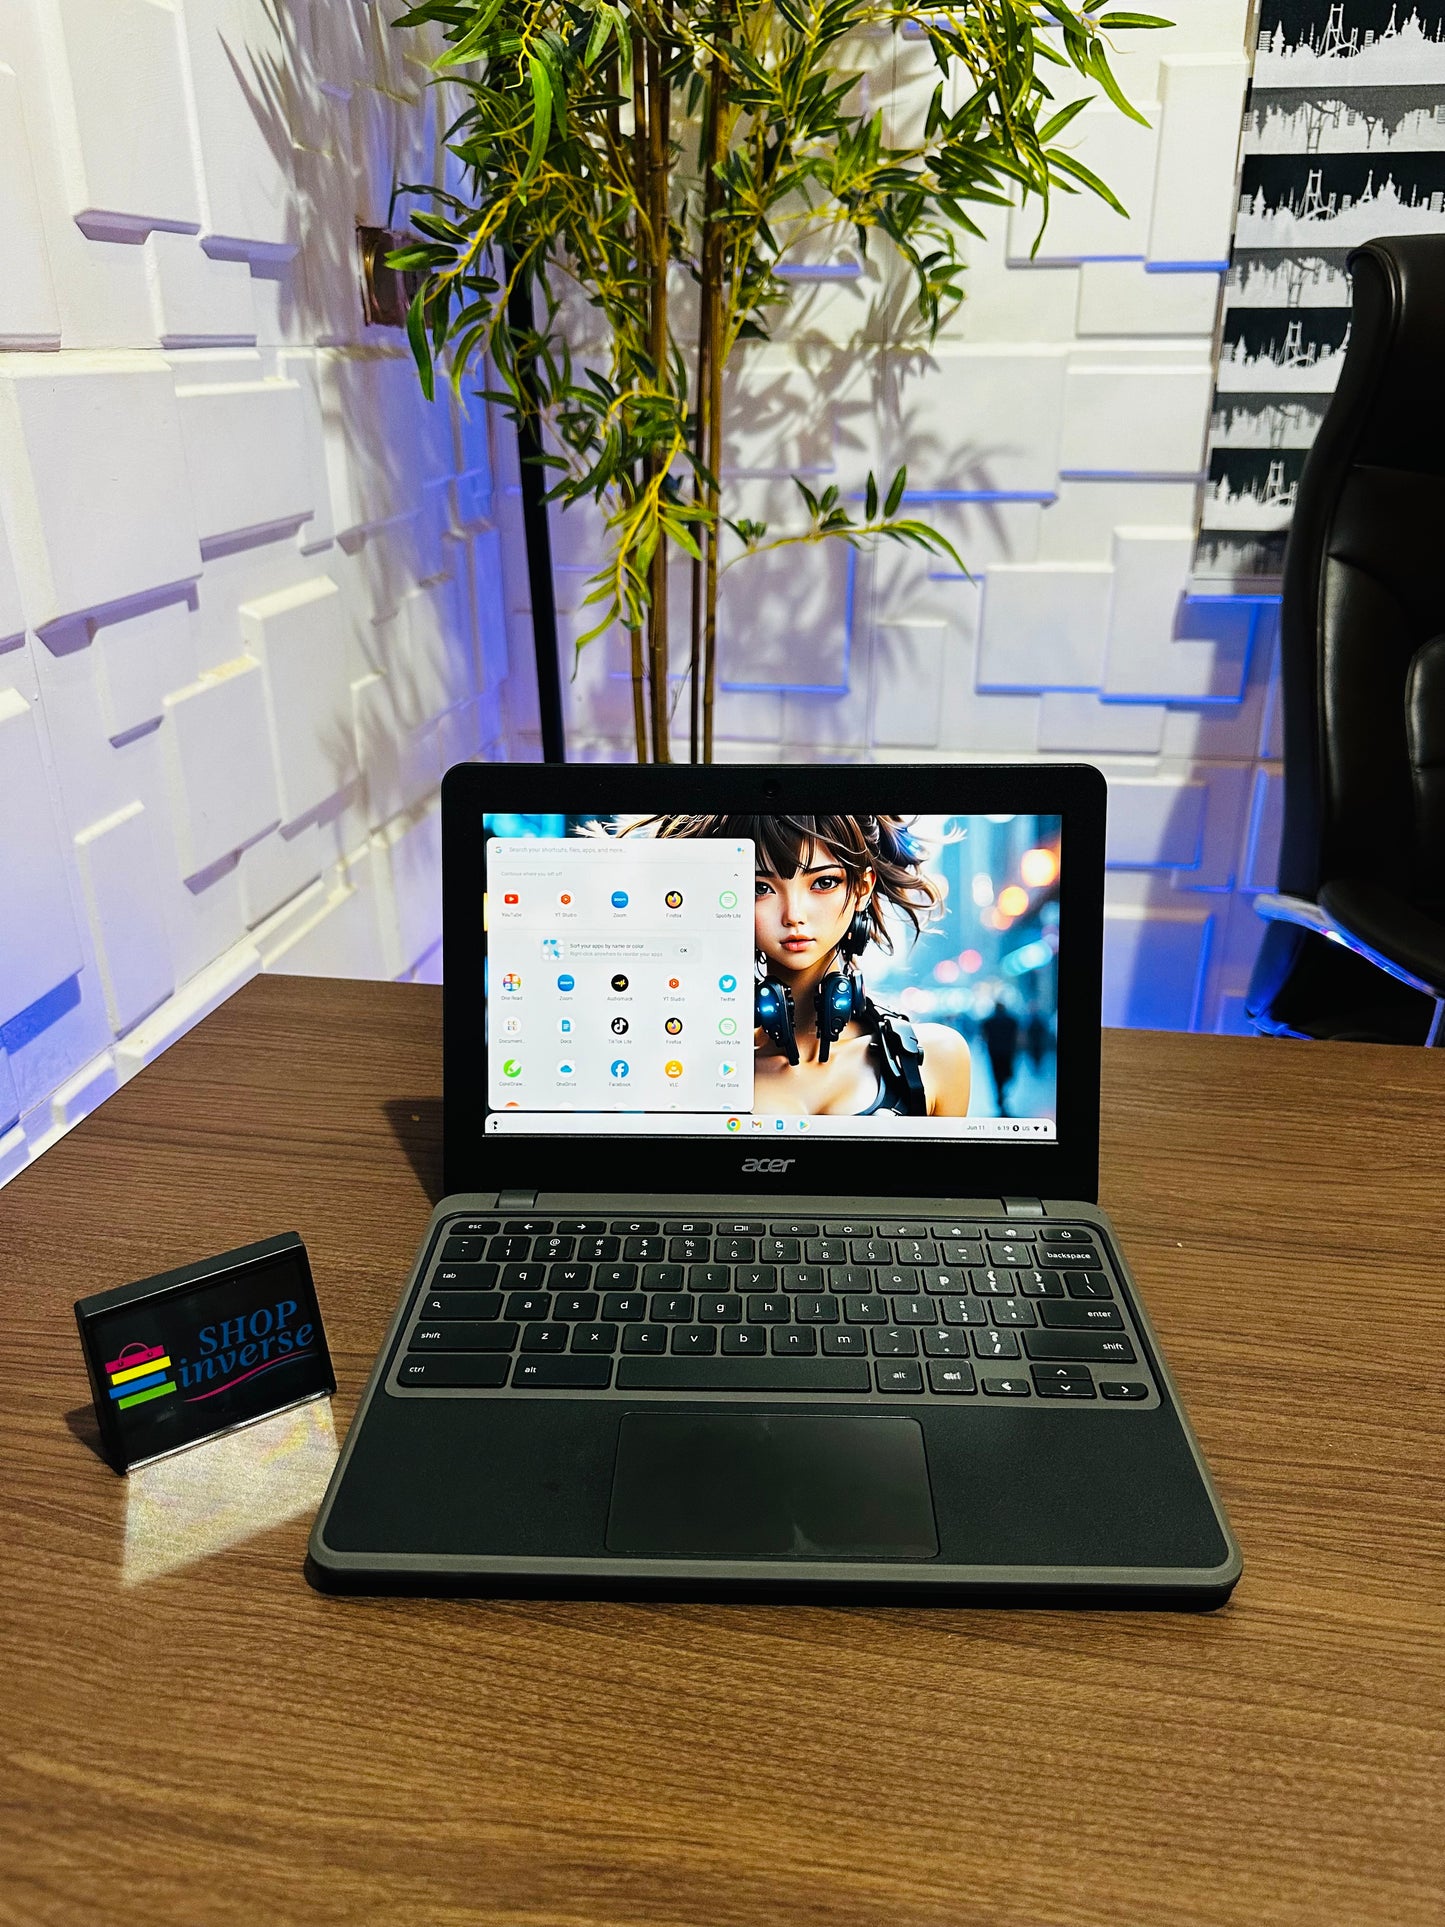 Acer Chromebook C722 - MediaTek mt8183 - 32GB eMMC - 4GB RAM